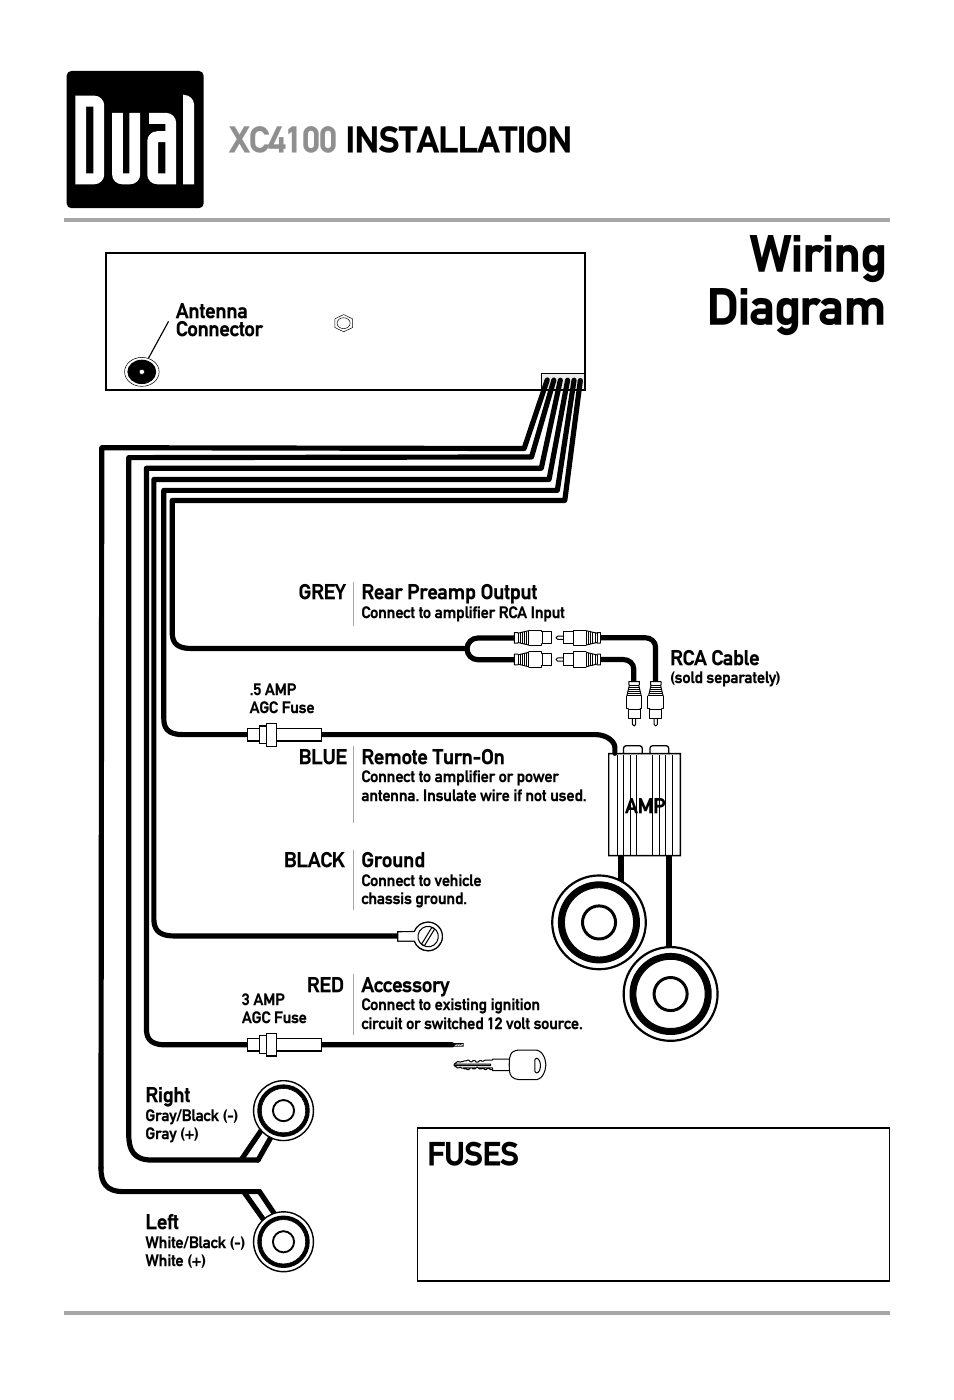 Wiring diagram, Xc4100 installation, Fuses | Dual XC4100 User Manual